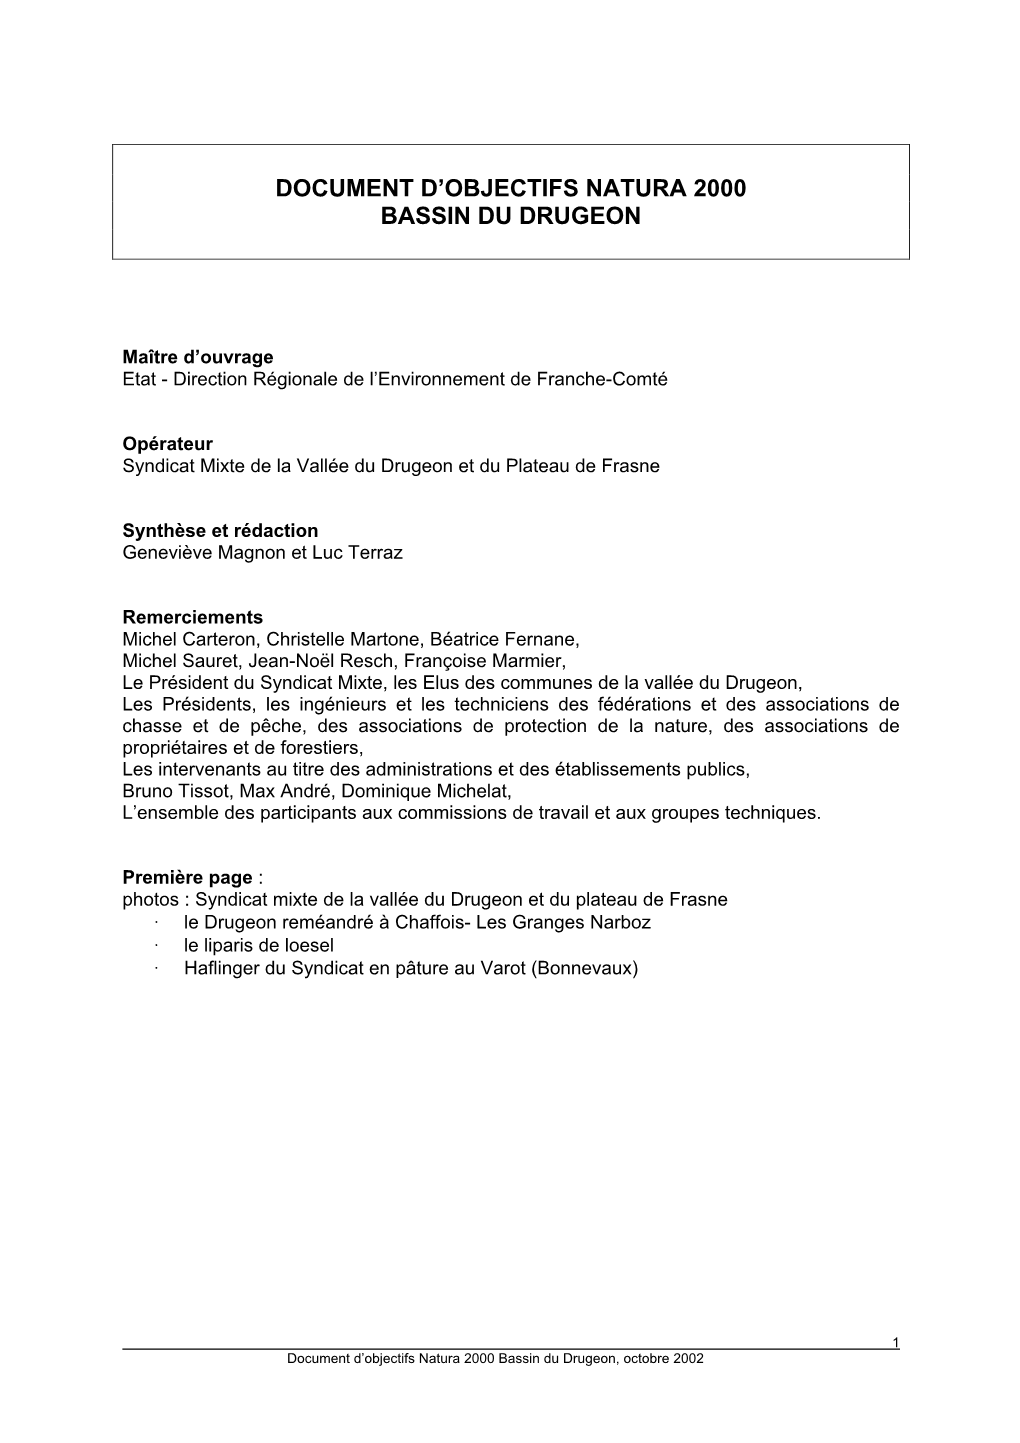 Document D'objectifs Natura 2000 Bassin Du Drugeon